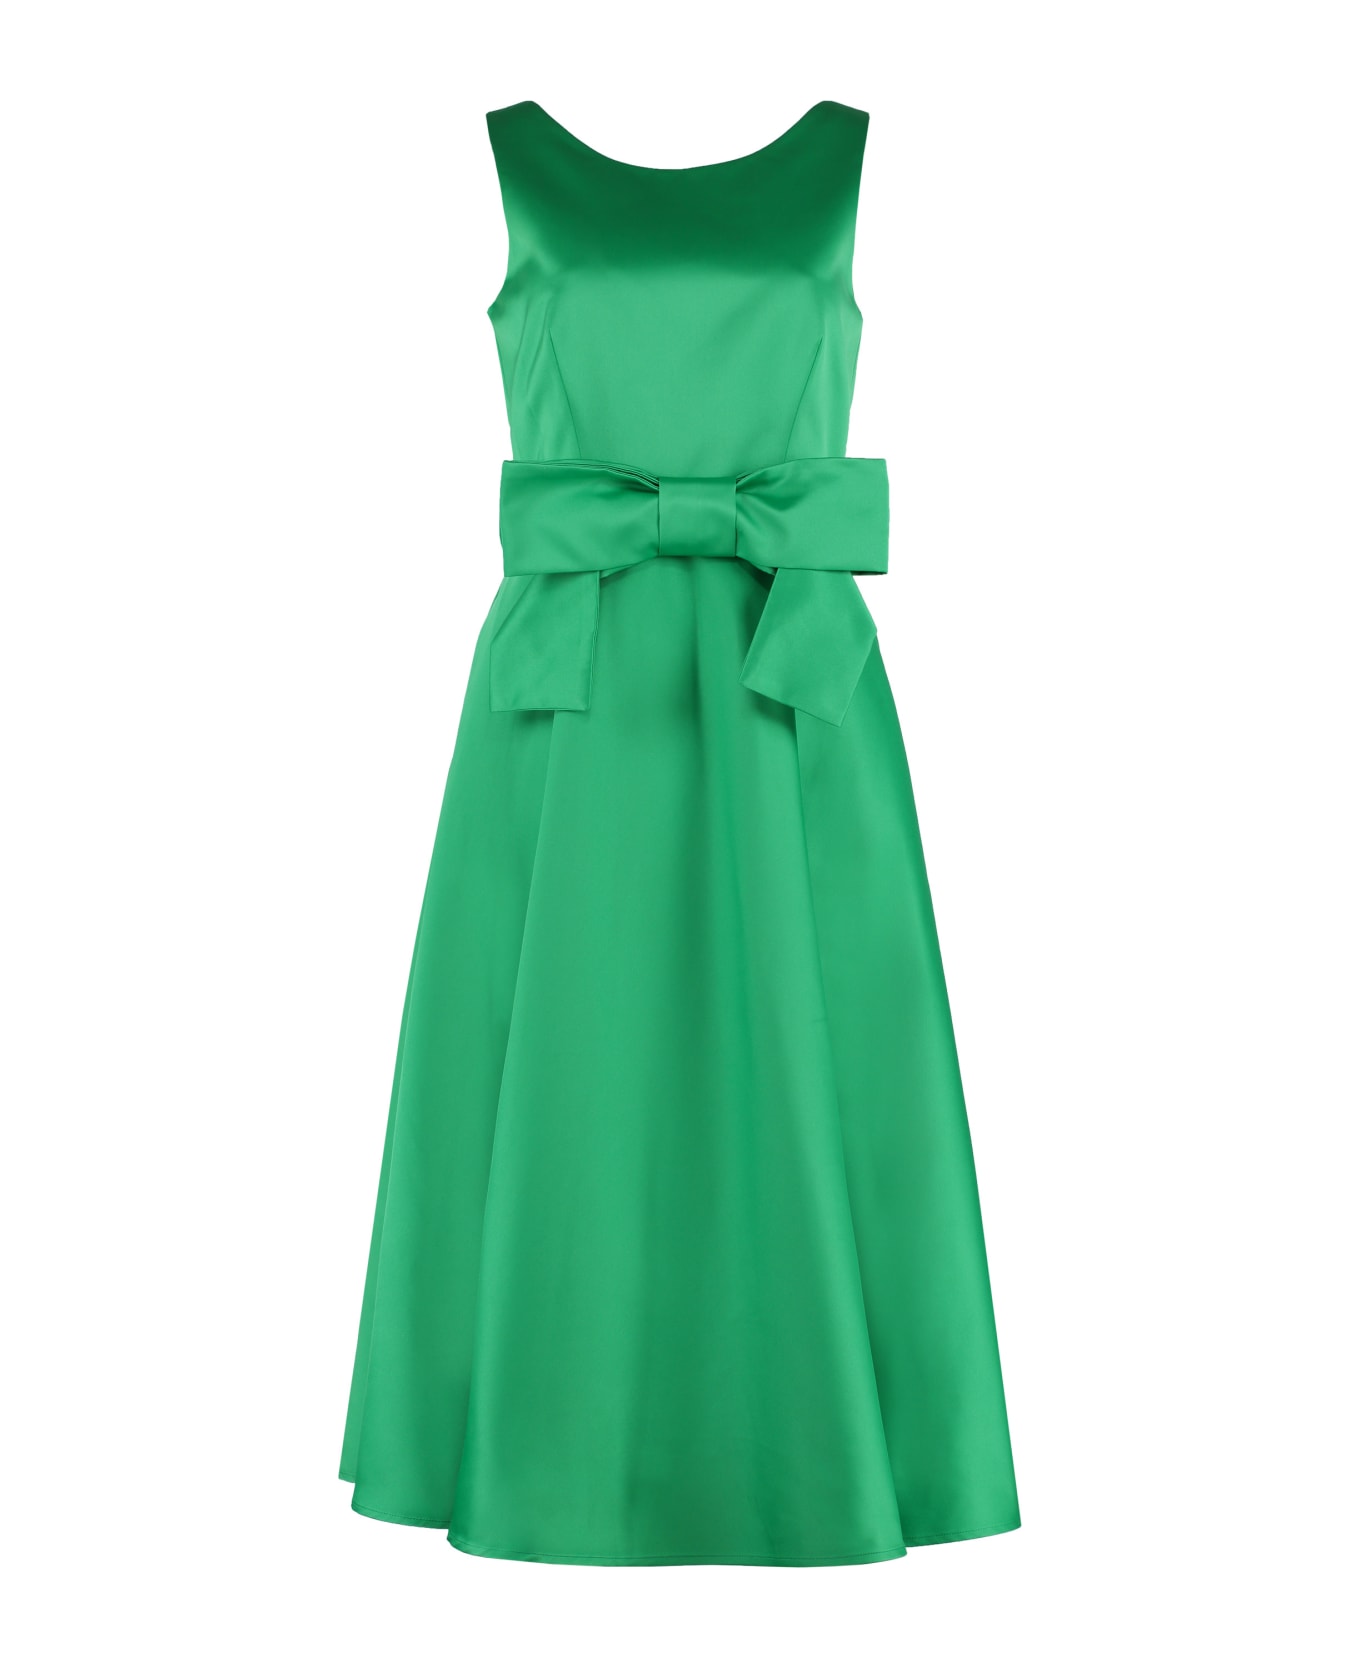 Parosh Belted Waist Dress - green